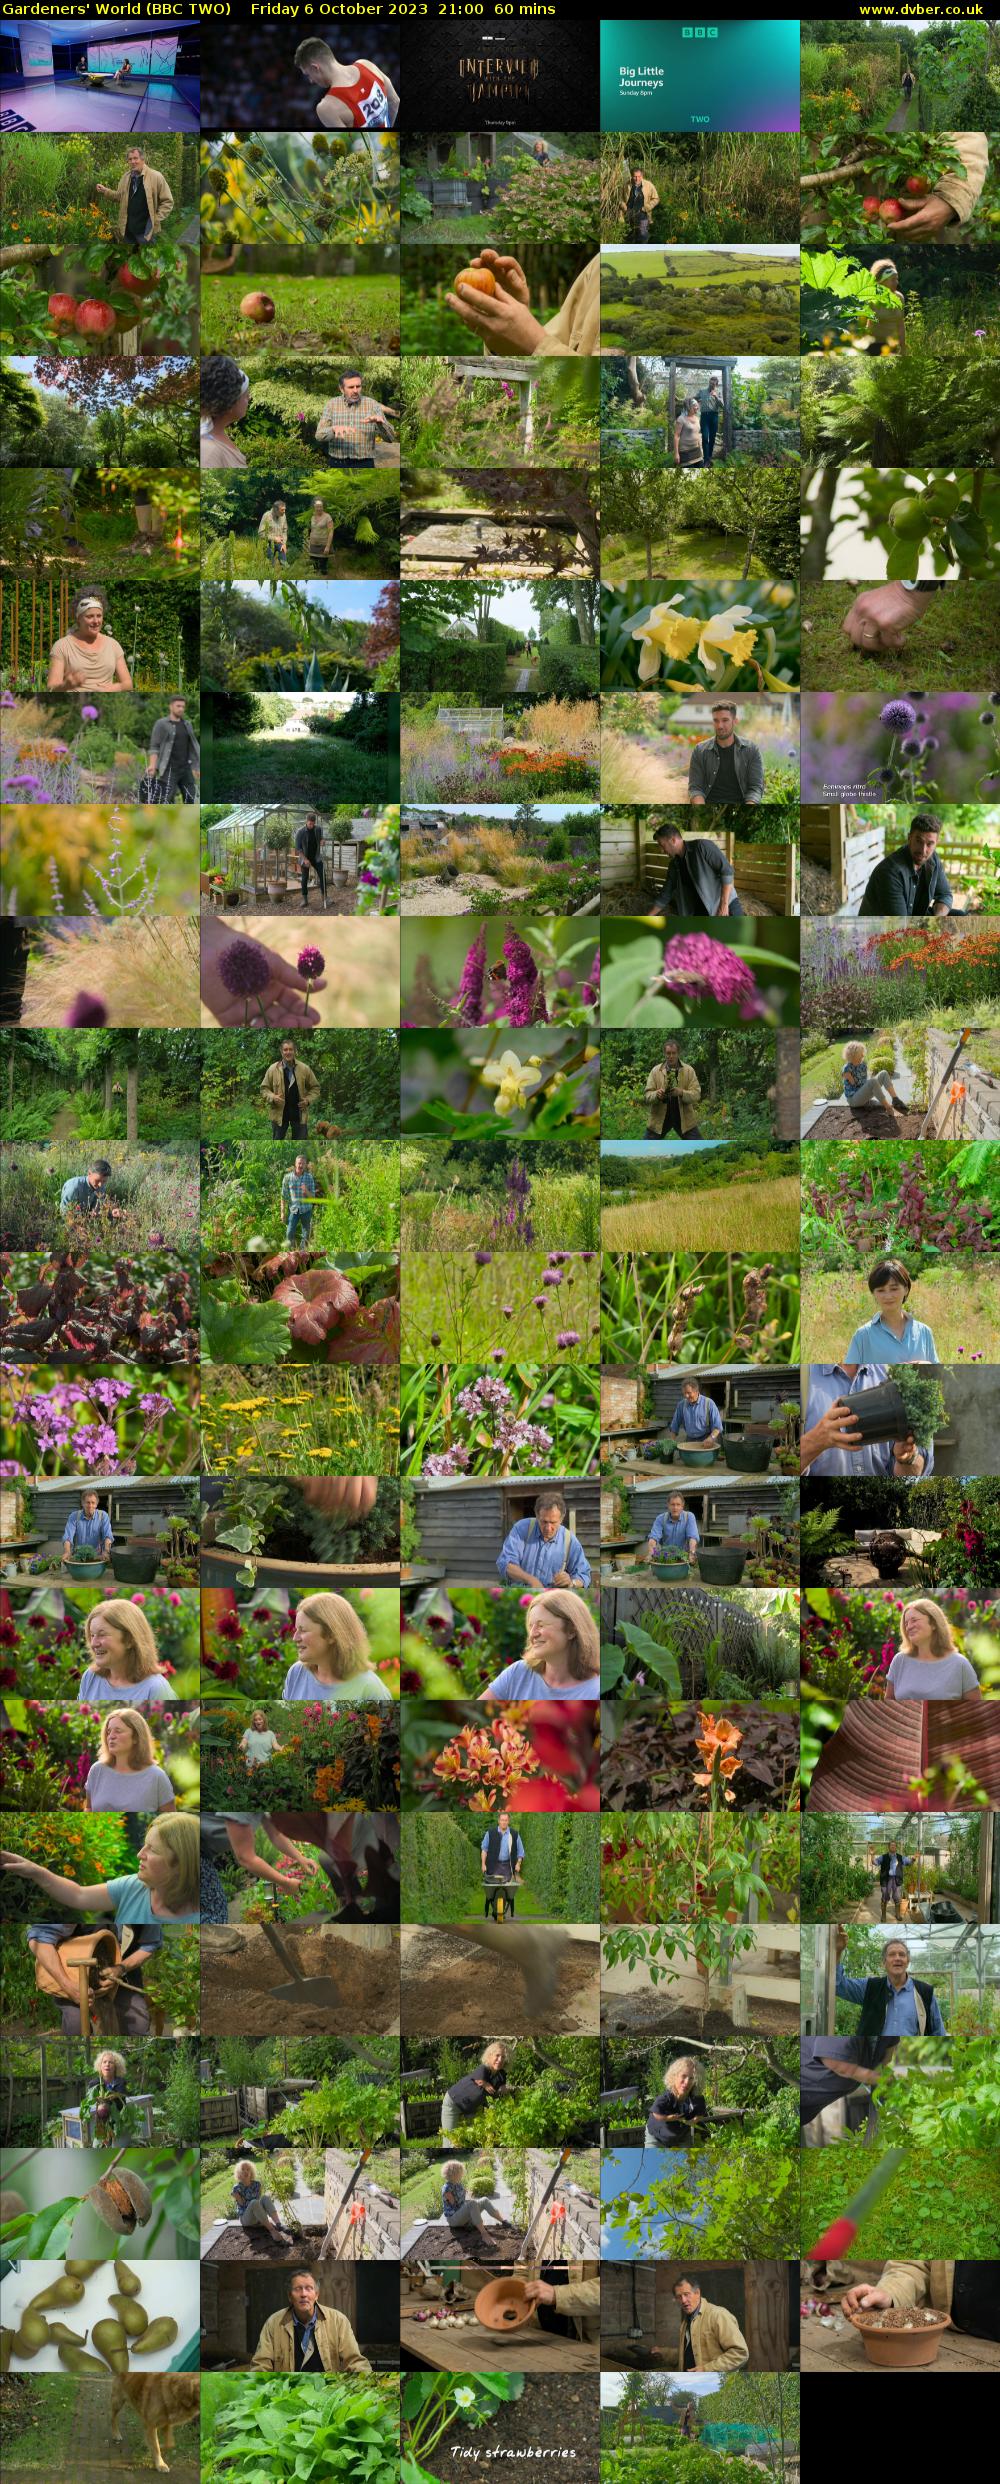 Gardeners' World (BBC TWO) Friday 6 October 2023 21:00 - 22:00